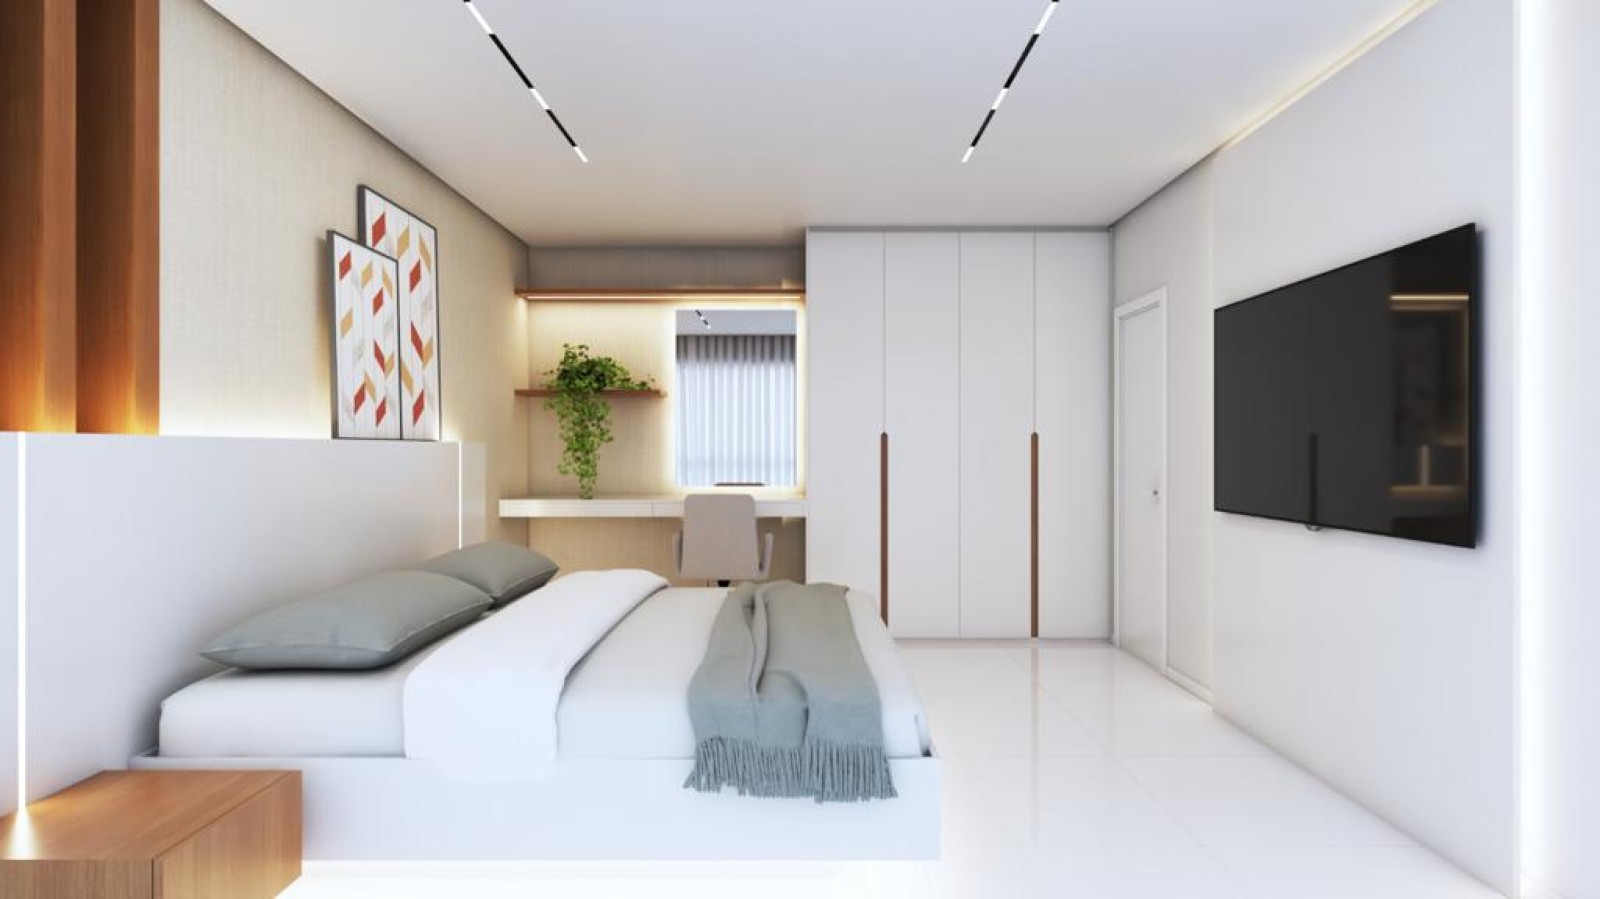 3 Bedroom Luxury House, for sale, in Portimão, Algarve_224118